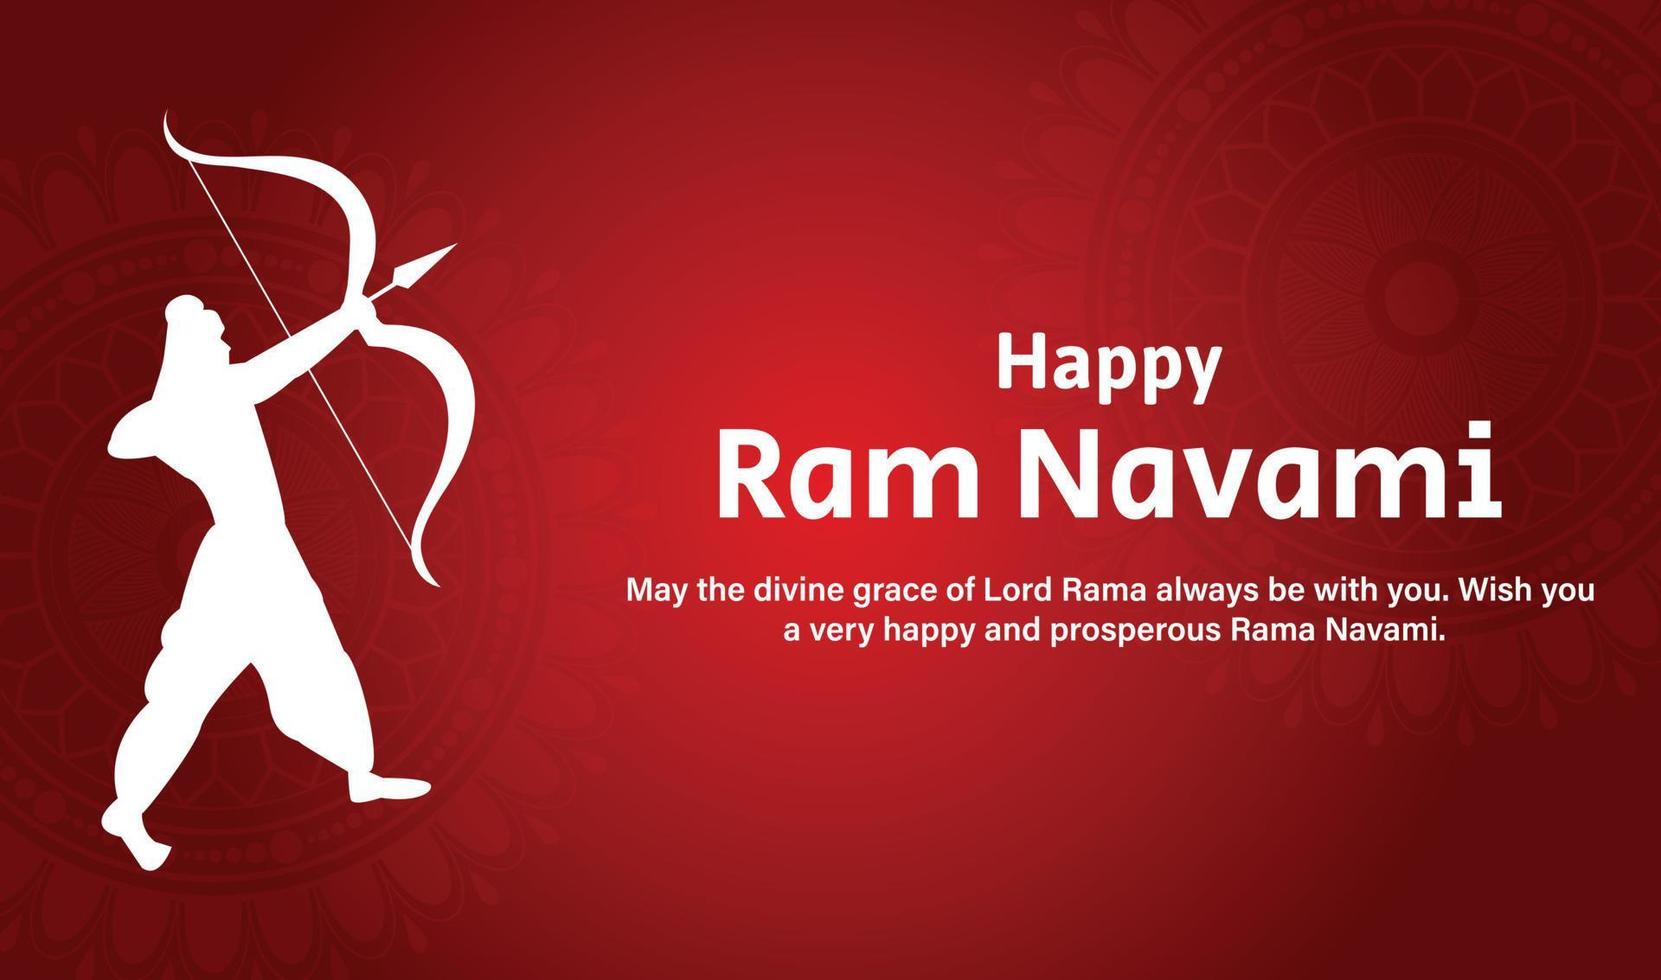 shree RAM navami Indisch Hindoe festival viering vector ontwerp